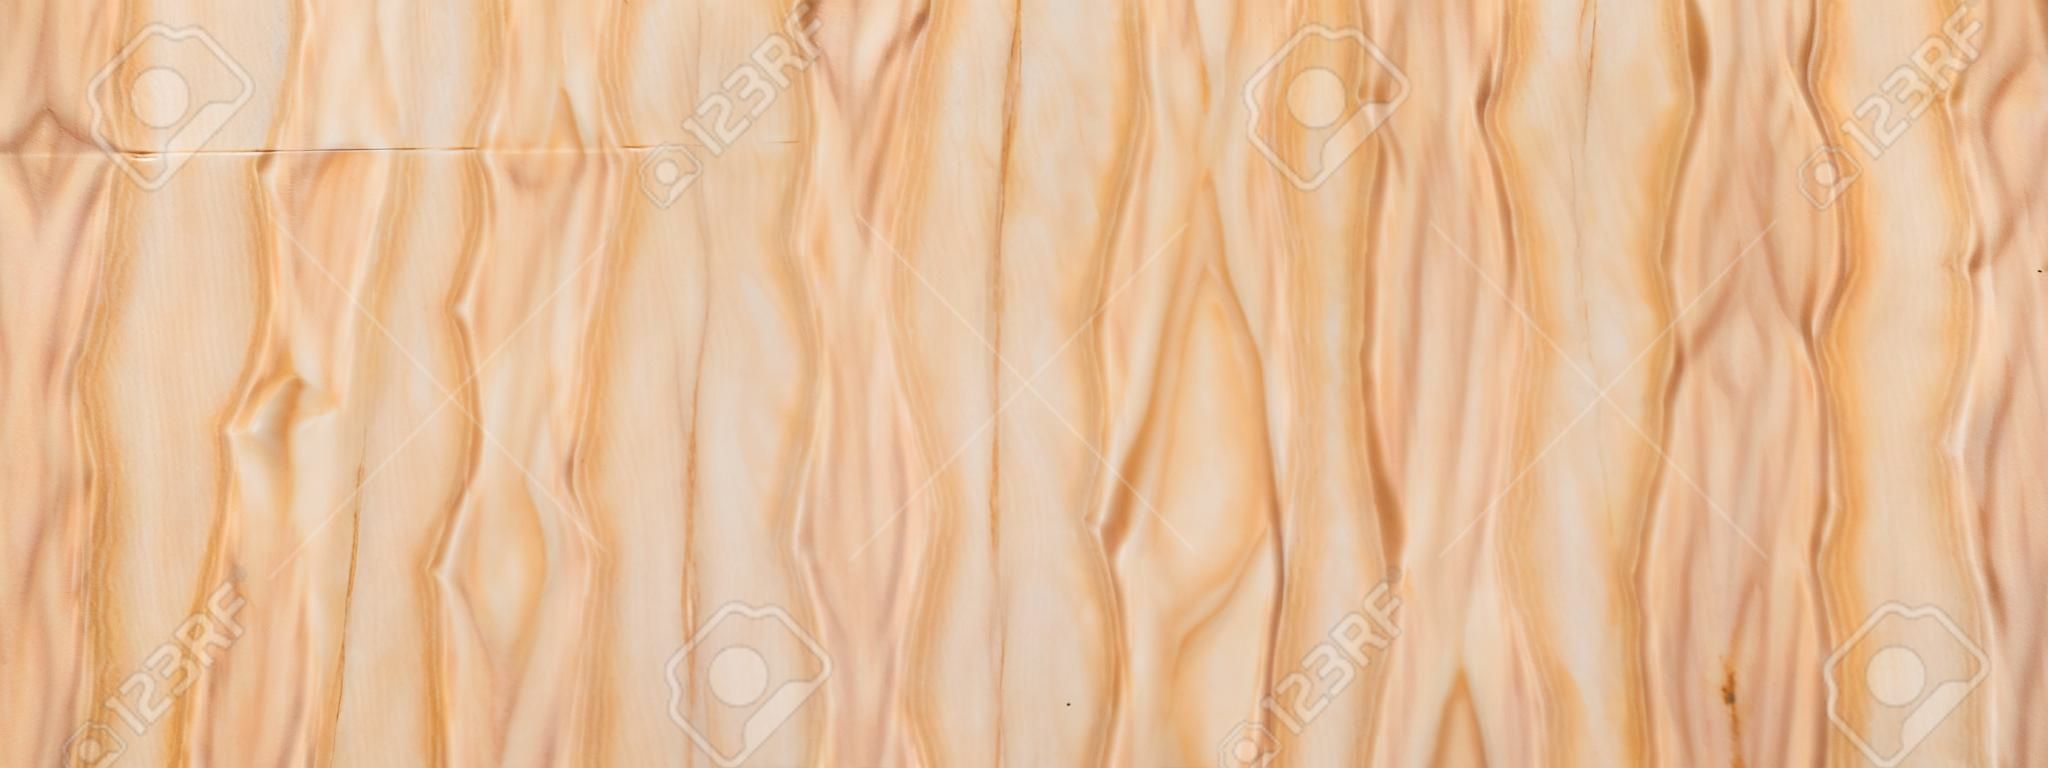 Tekstury Quilted Maple, używane jako tło